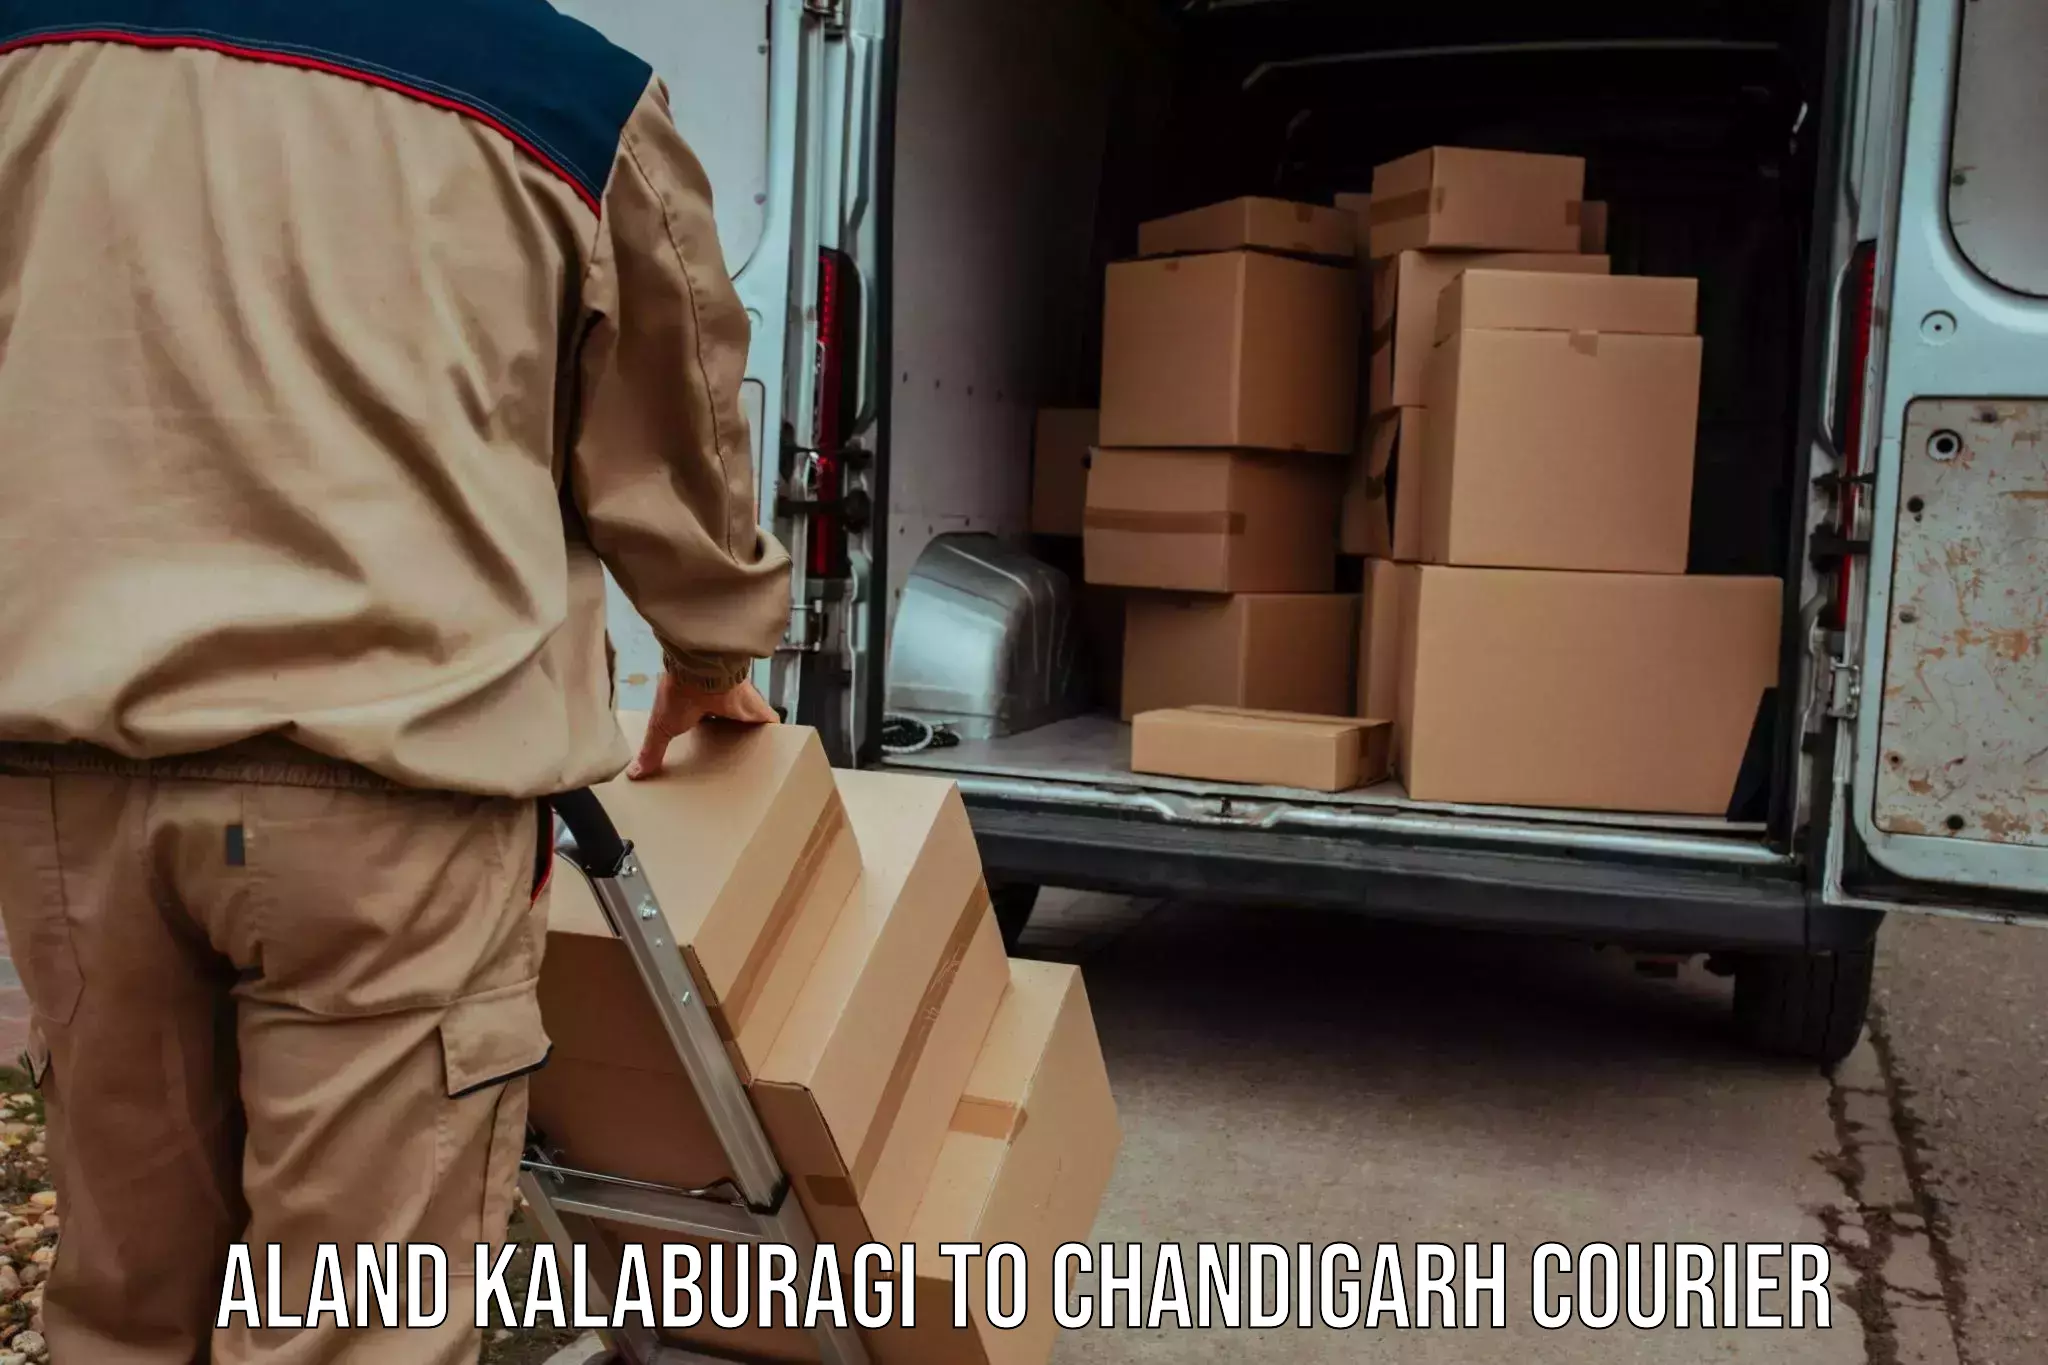 Global logistics network Aland Kalaburagi to Chandigarh